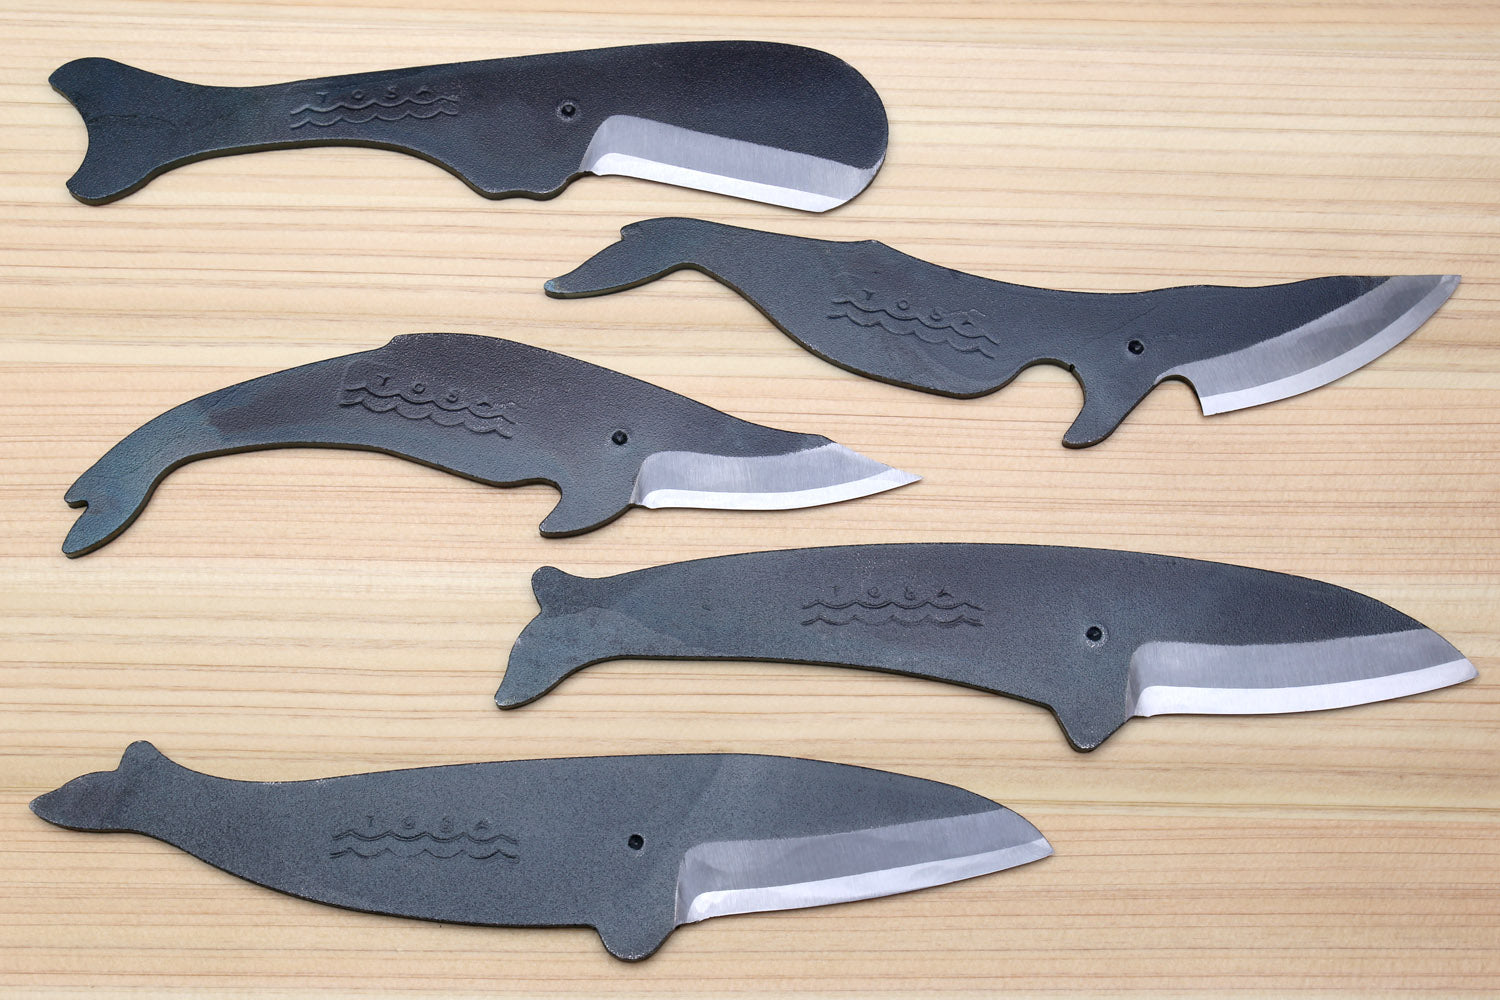 Yoshi Blade Zirconia Ceramic Kitchen Knives-Utility Knife - China